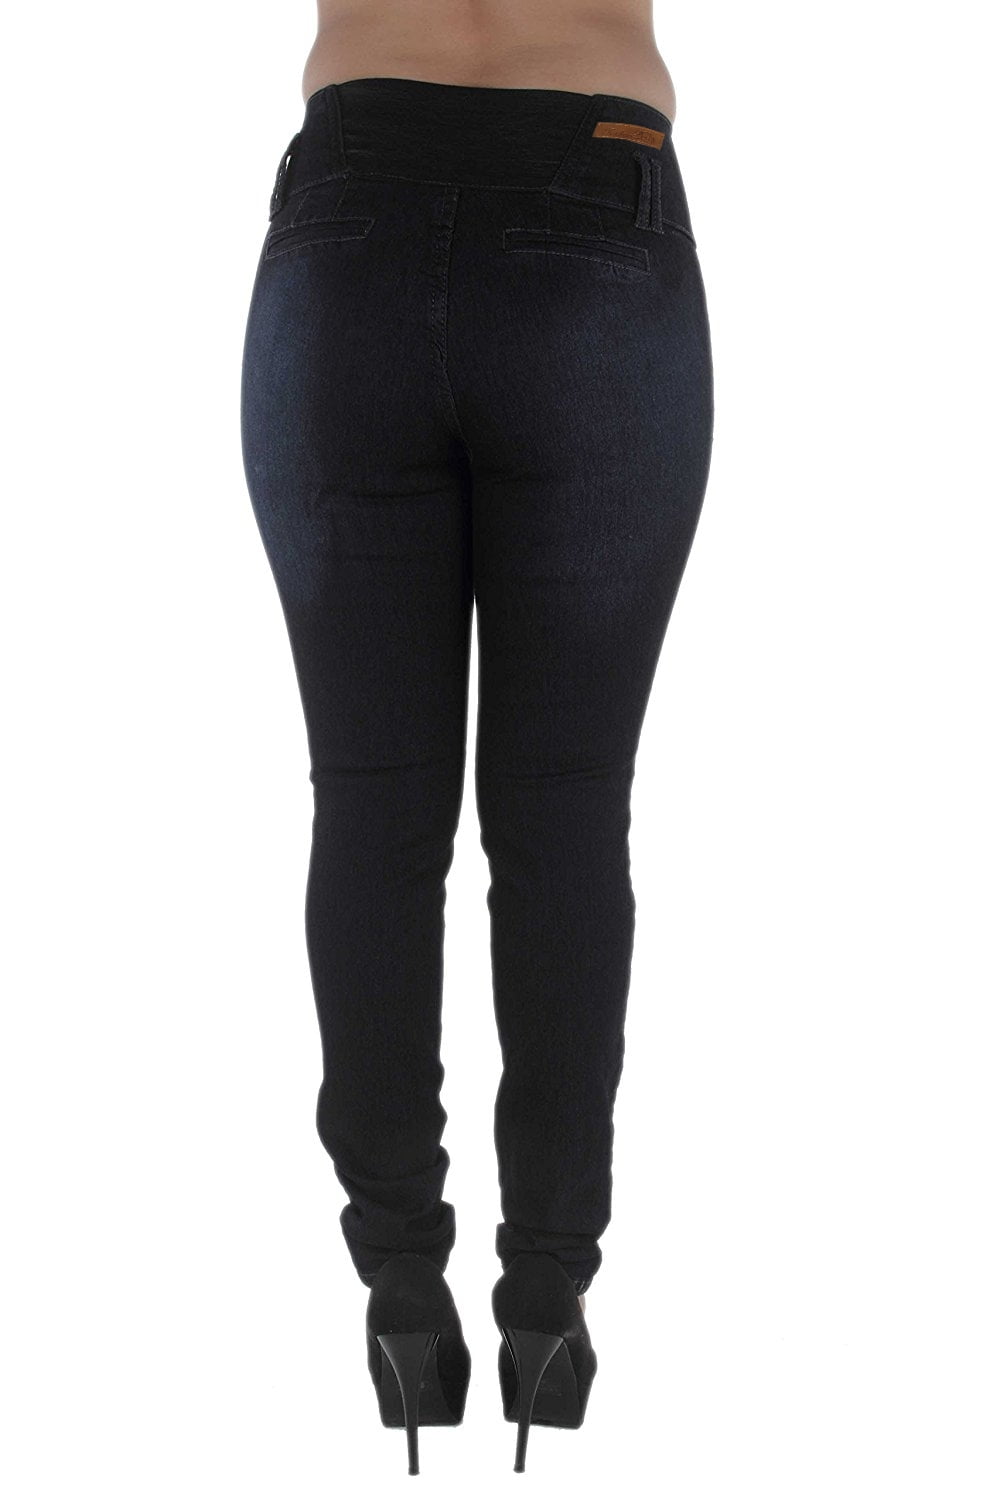 Plus Size High Waist Design Butt Lift Elastic Waist Skinny Jeans